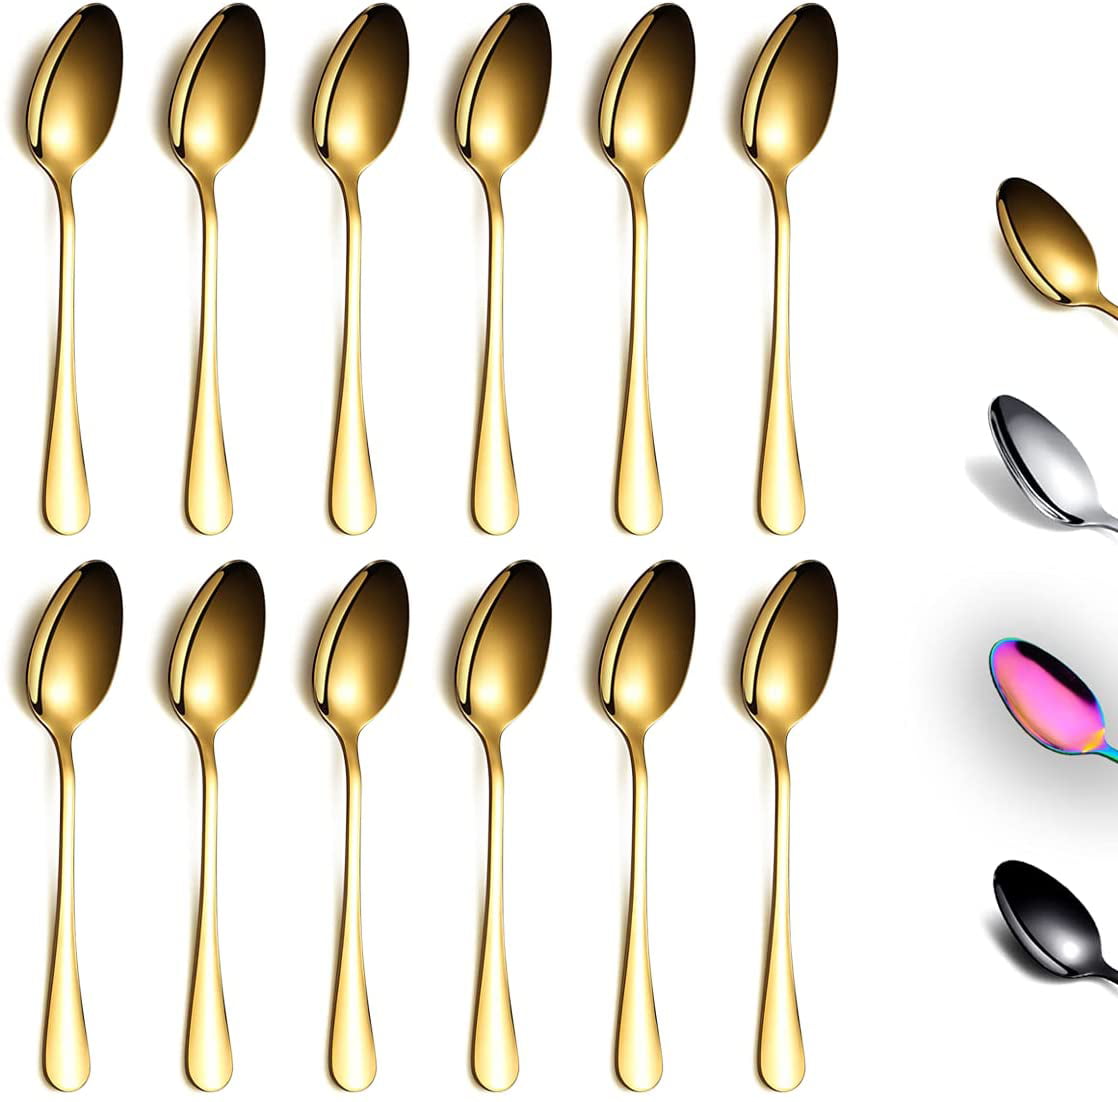 6 Stainless Steel Metal Tea Spoons Evokk Cutlery Home Office Kitchen Spoon 